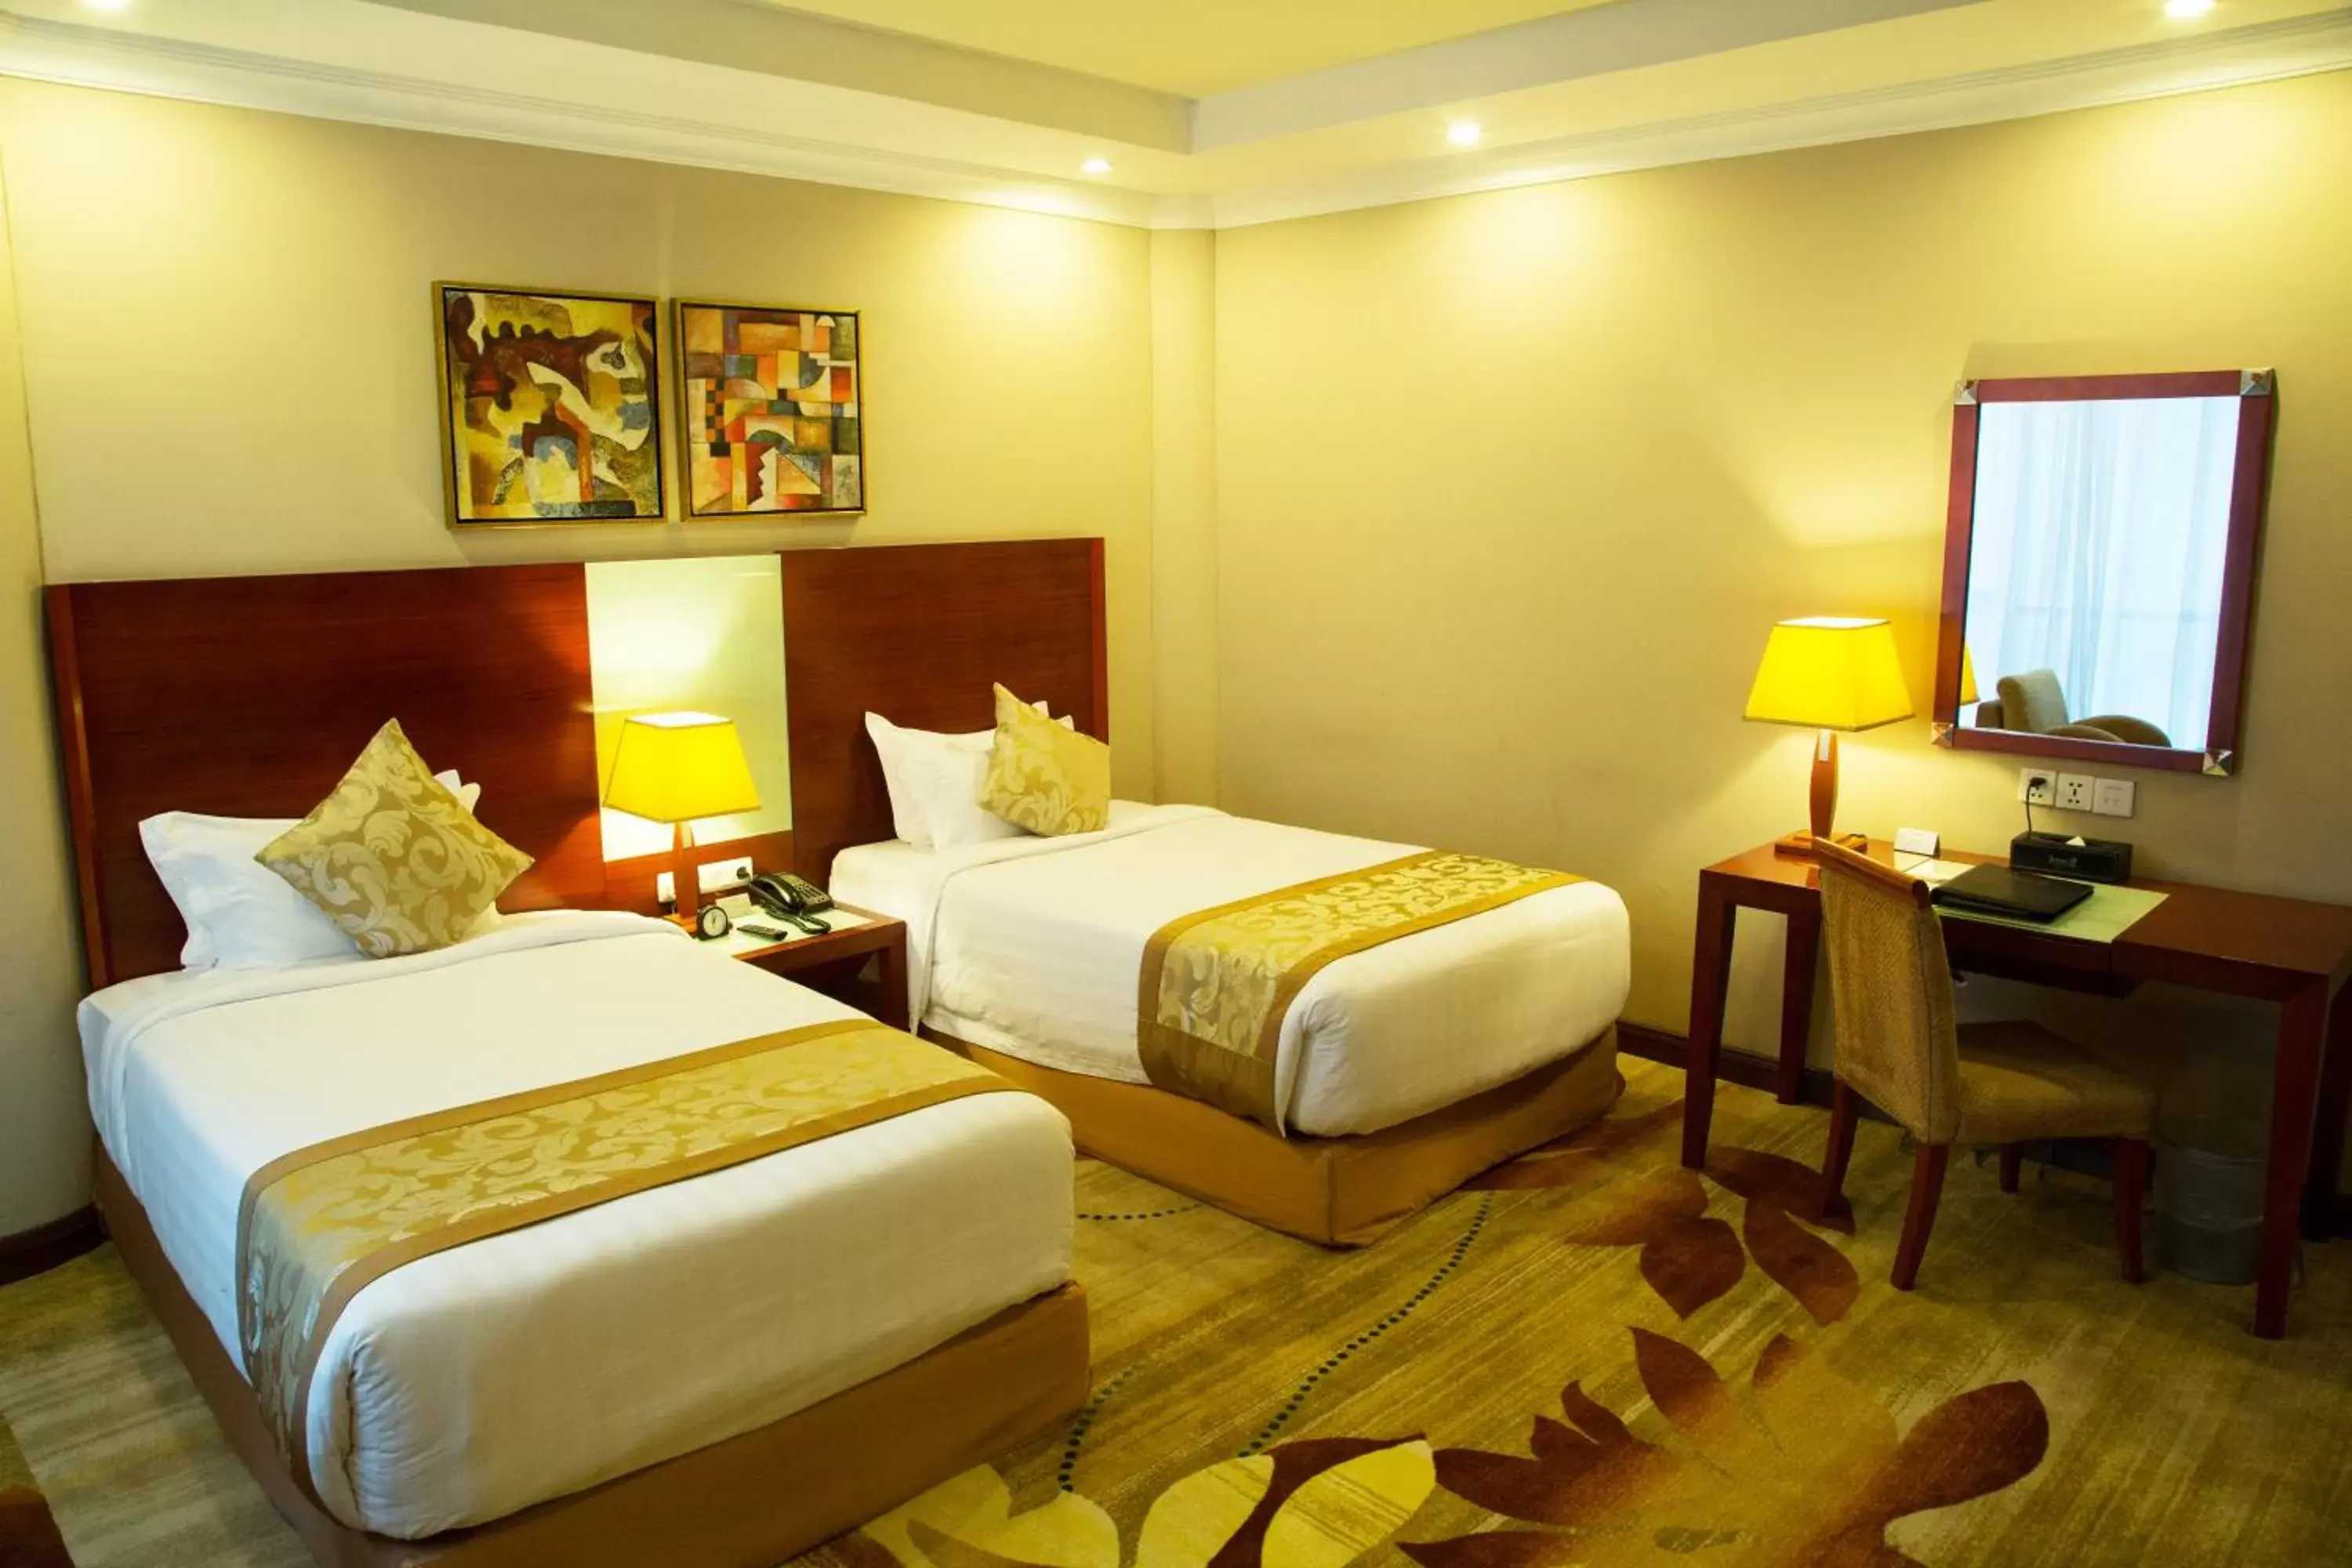 Bedroom, Room Photo in Jupiter International Hotel - Cazanchis